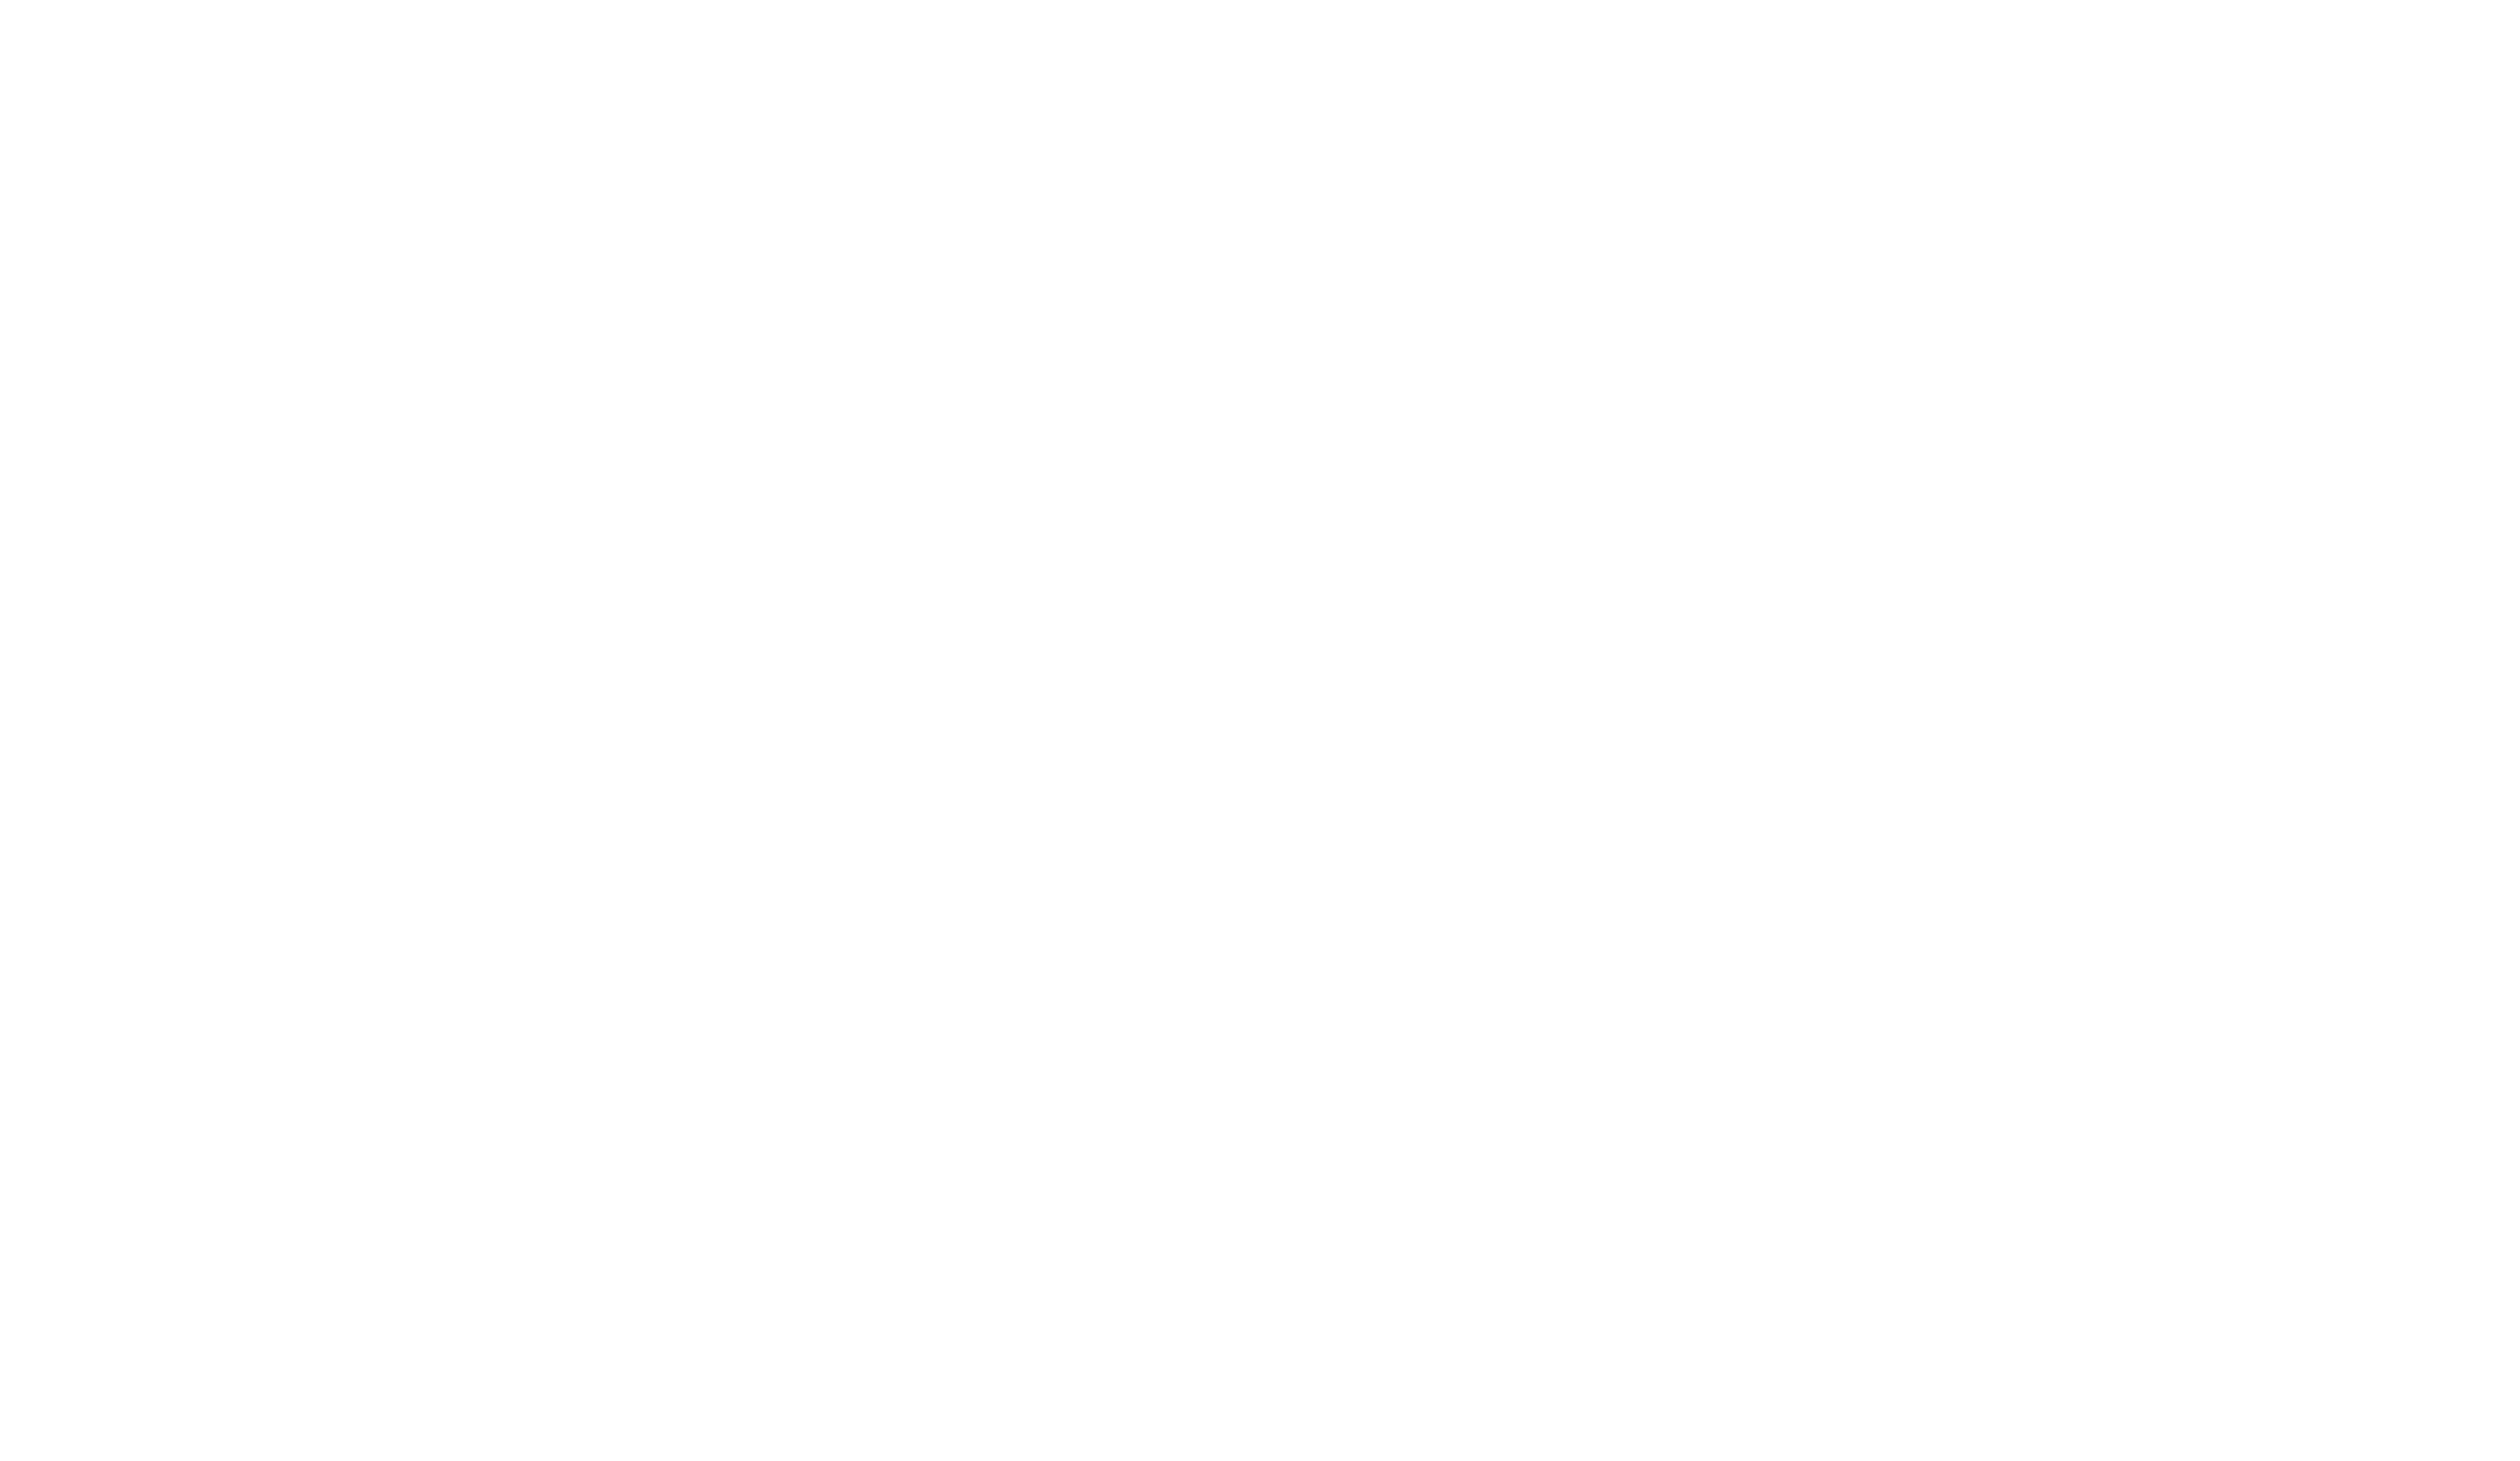 airCloset Report 6th Anniversary